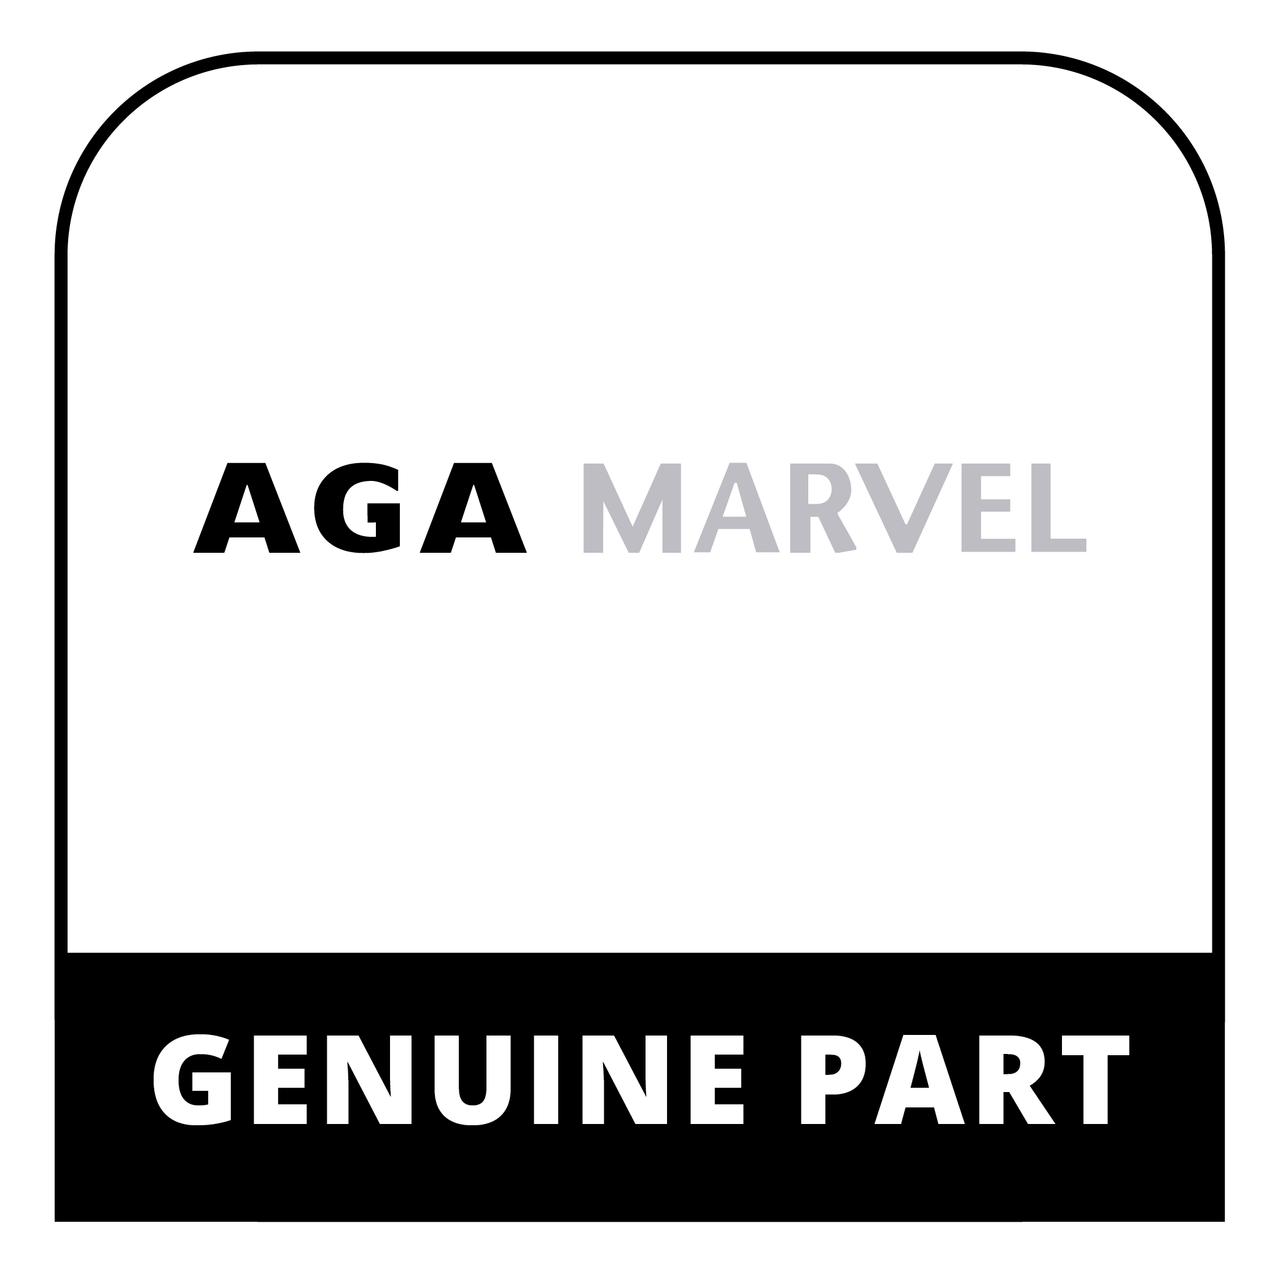 AGA Marvel AG4M998615 - Small Brnr Seal Gas Hob H/C - Genuine AGA Marvel Part